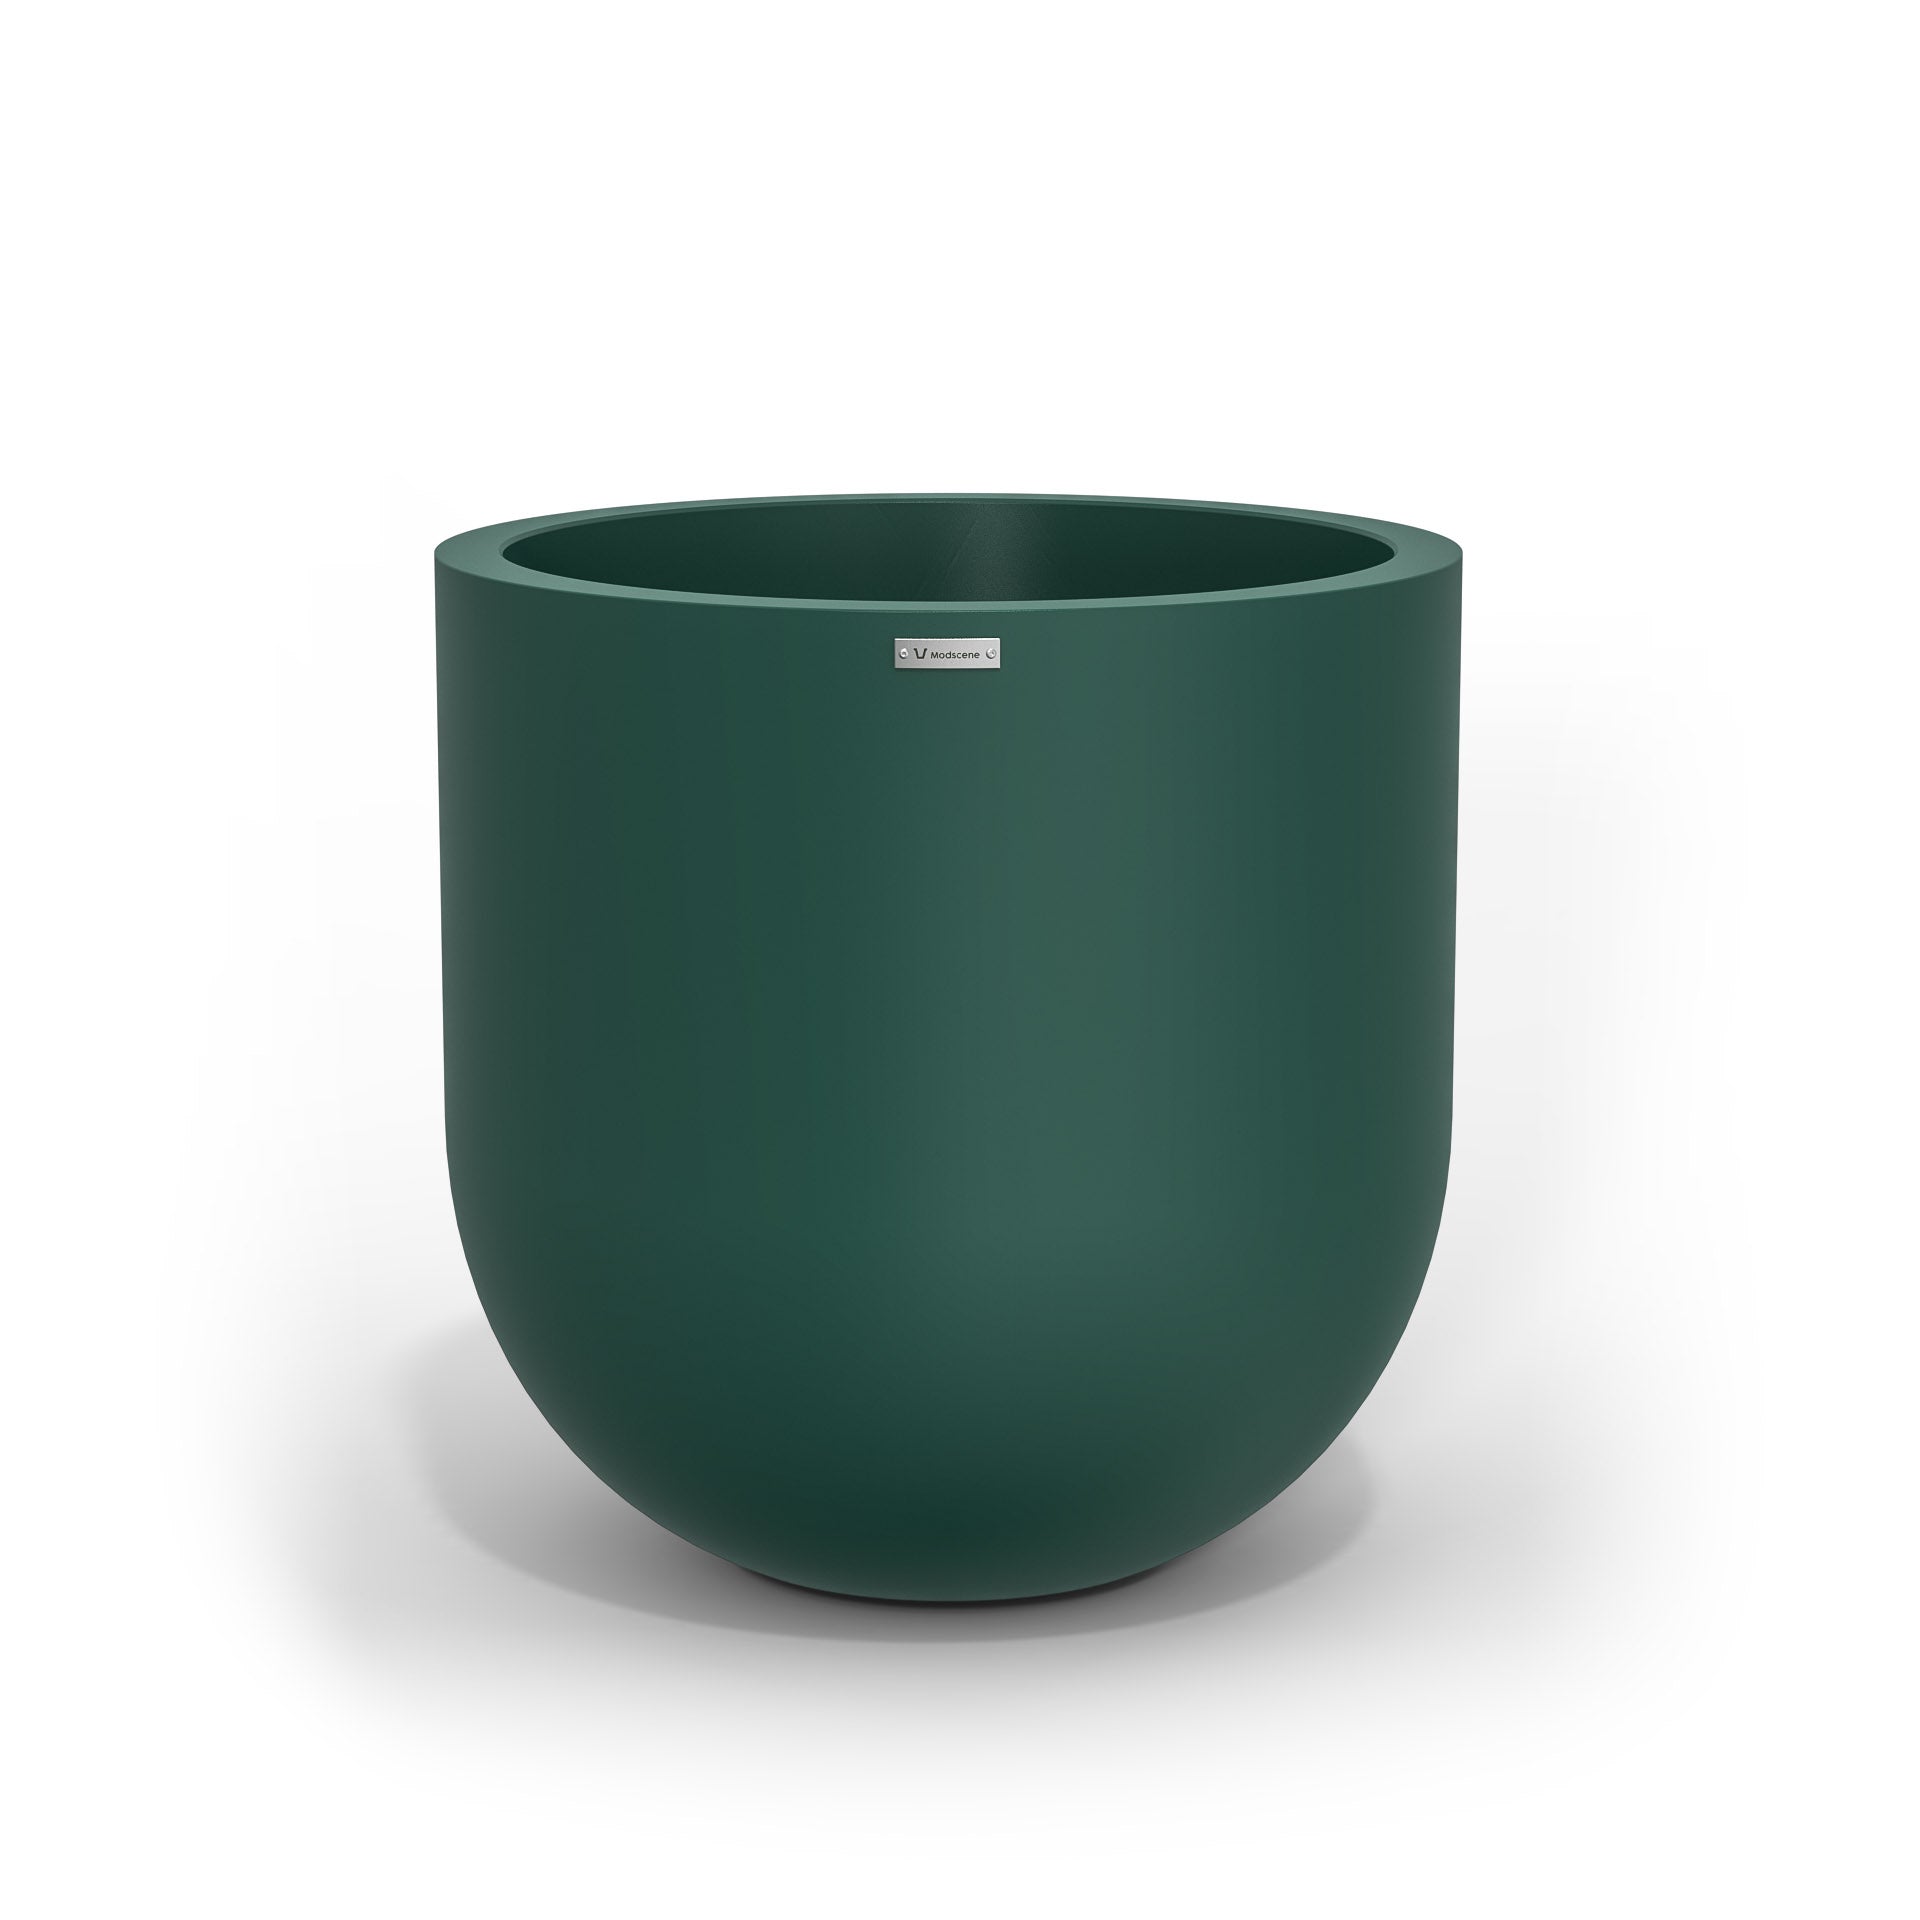 NZ made large Modscene planter pot in an emerald green colour.